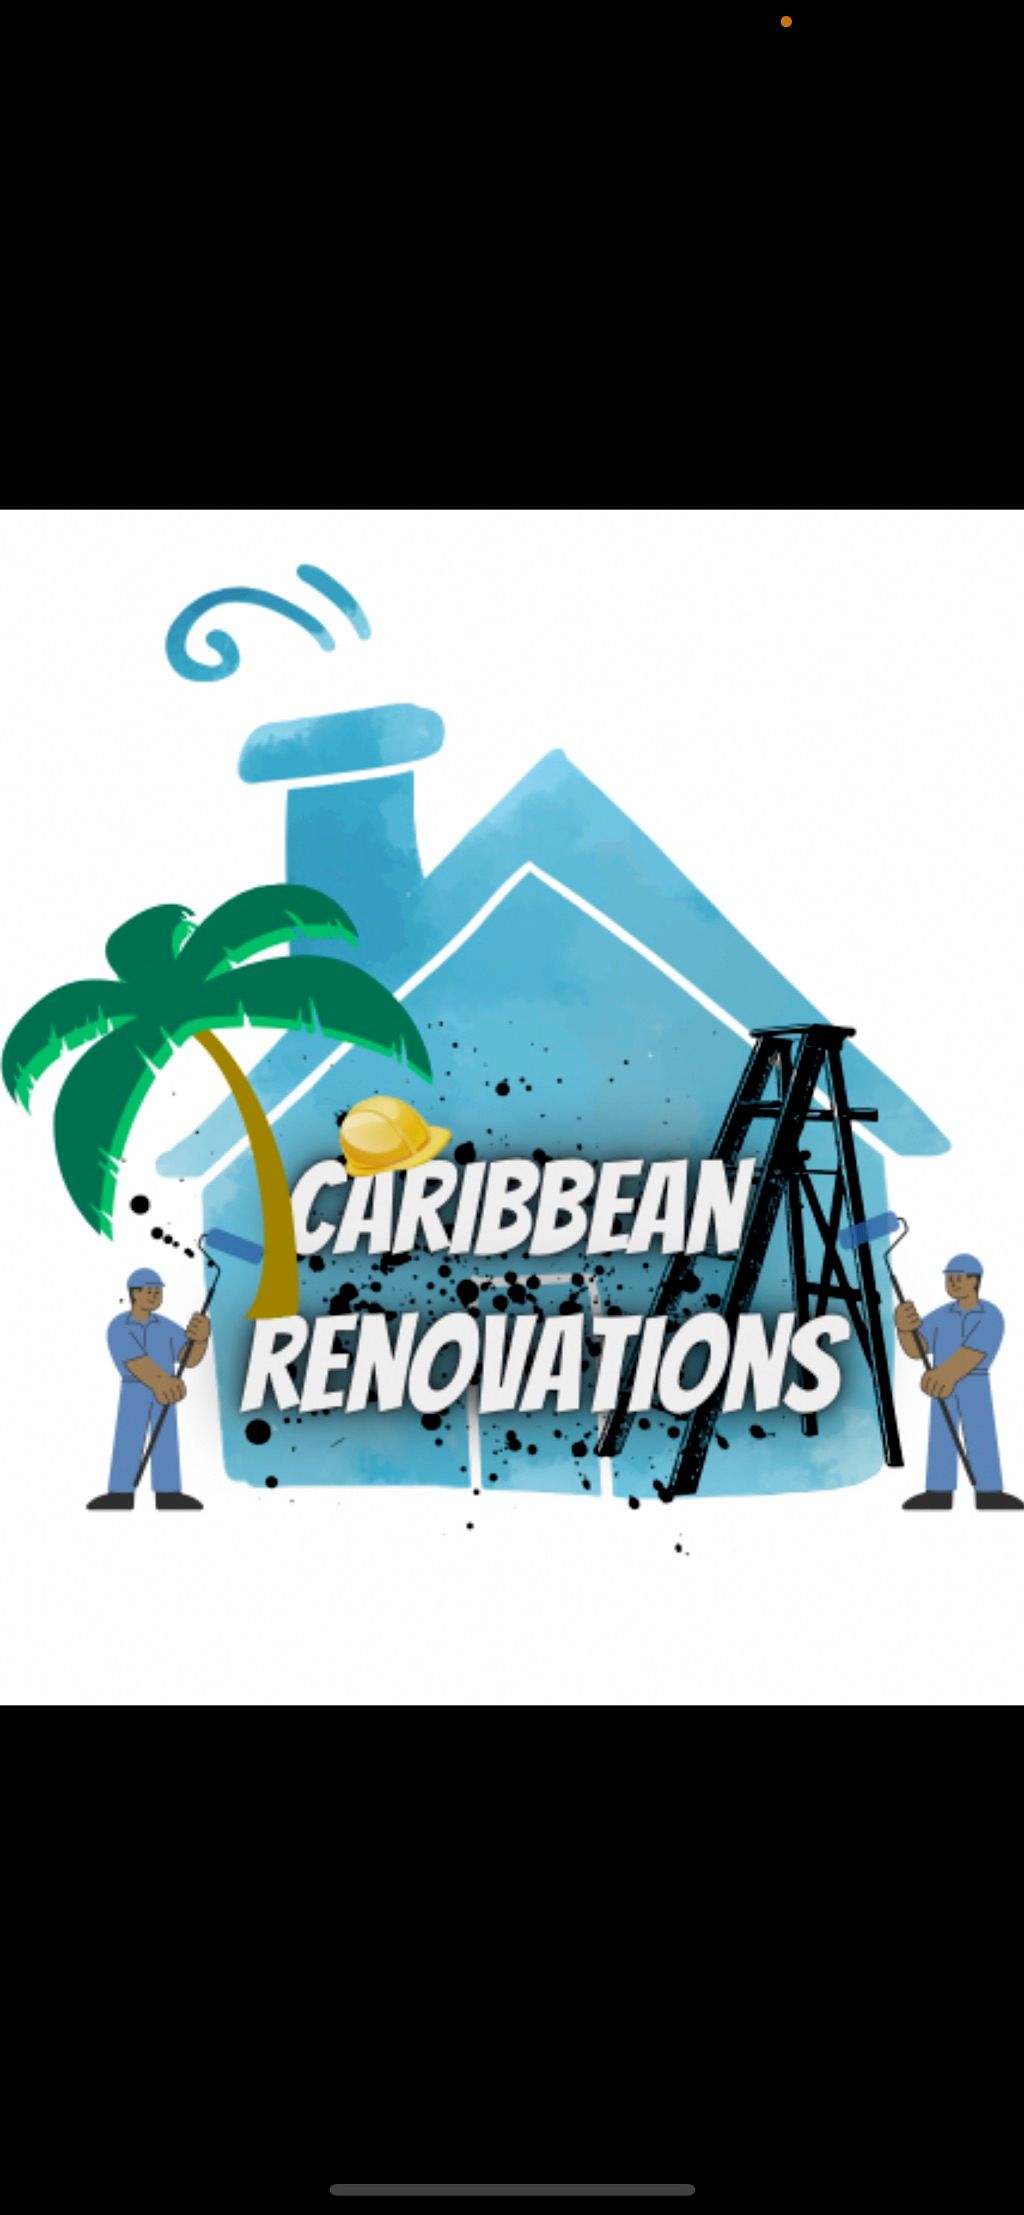 Caribbean Renovation, LLC